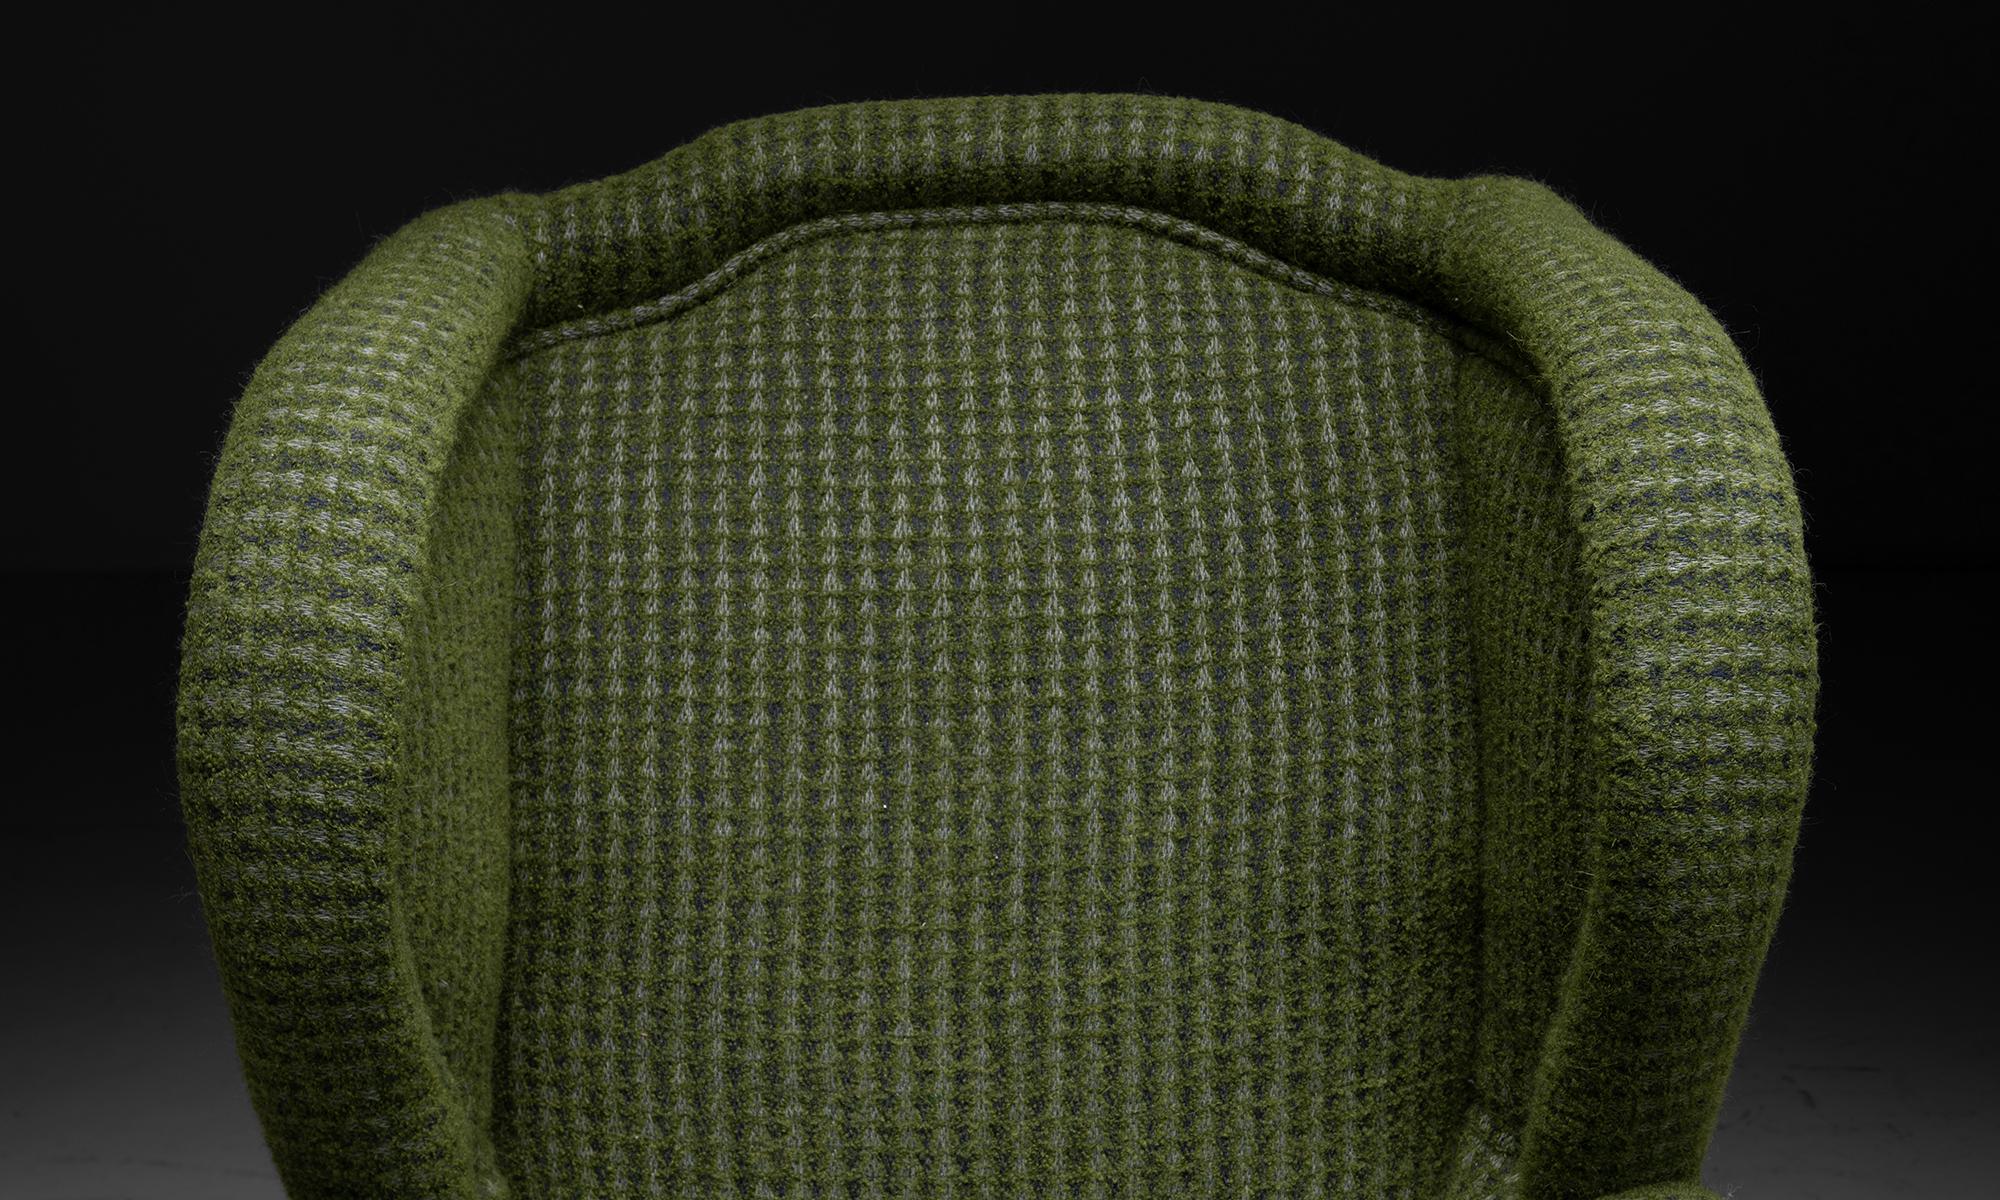 dark green wingback chair